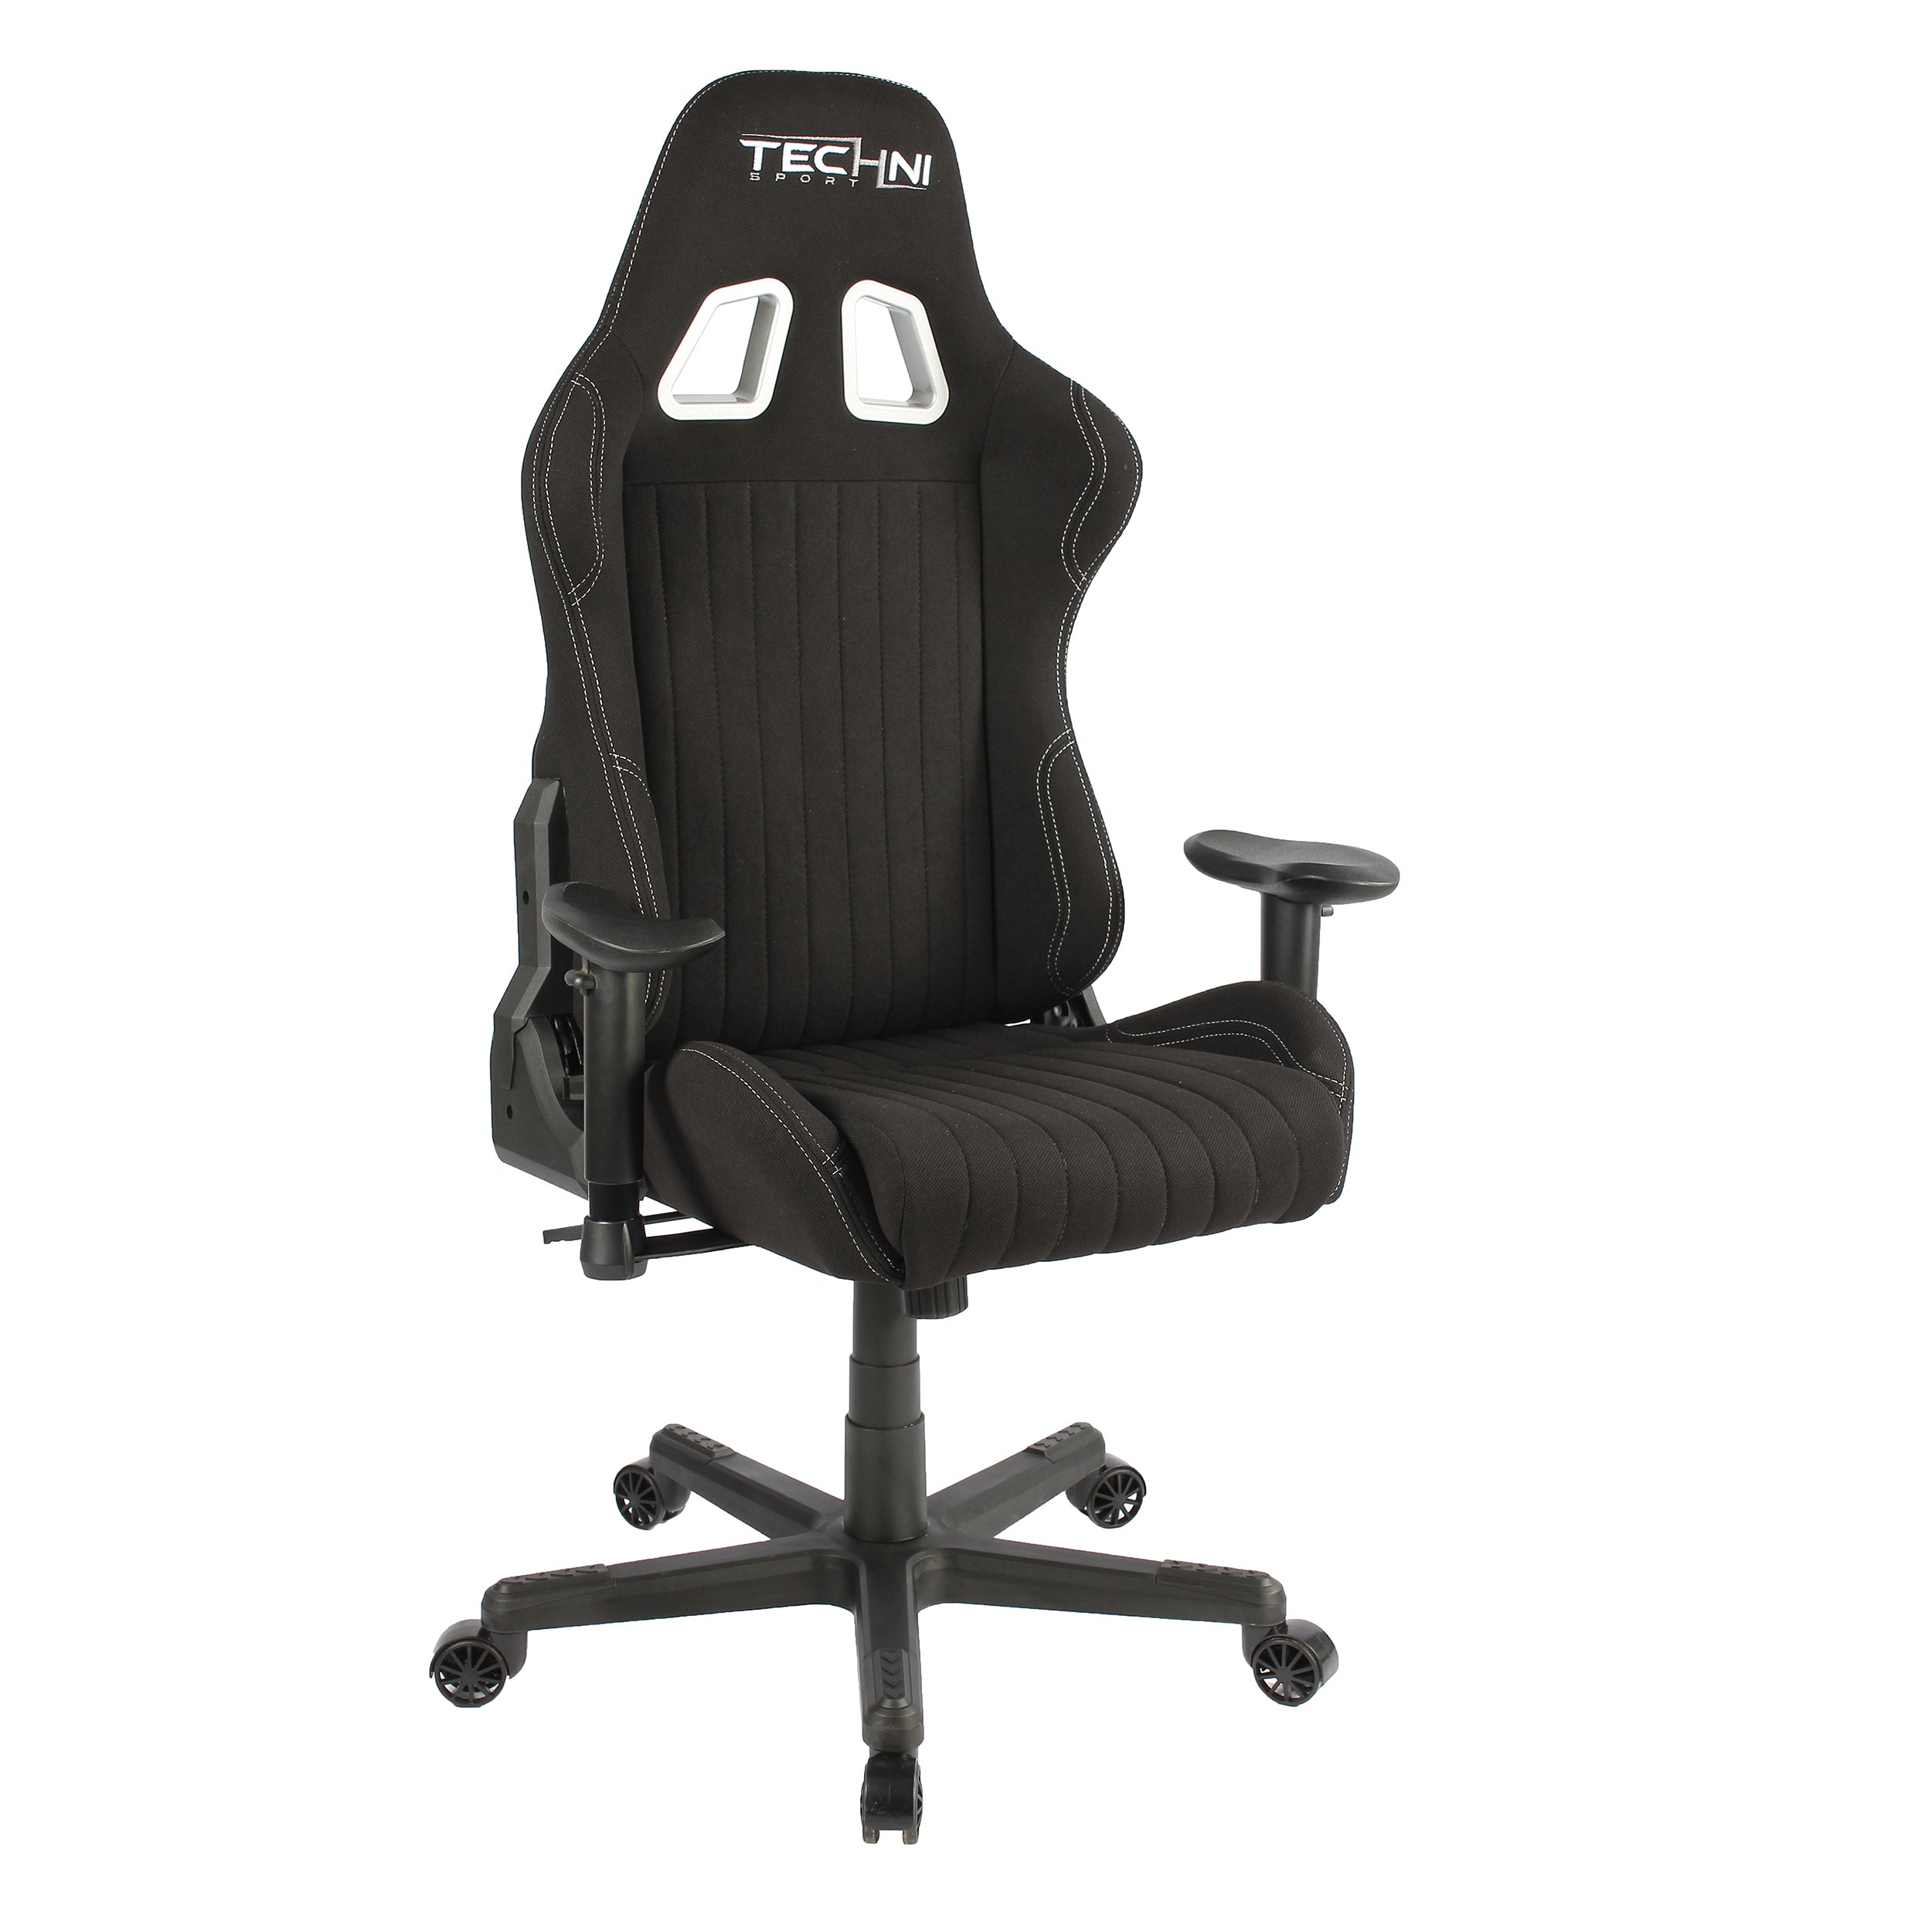 Techni Sport TS-F44 Fabric Ergonomic High Back Racer Style Gaming Chair (Black)